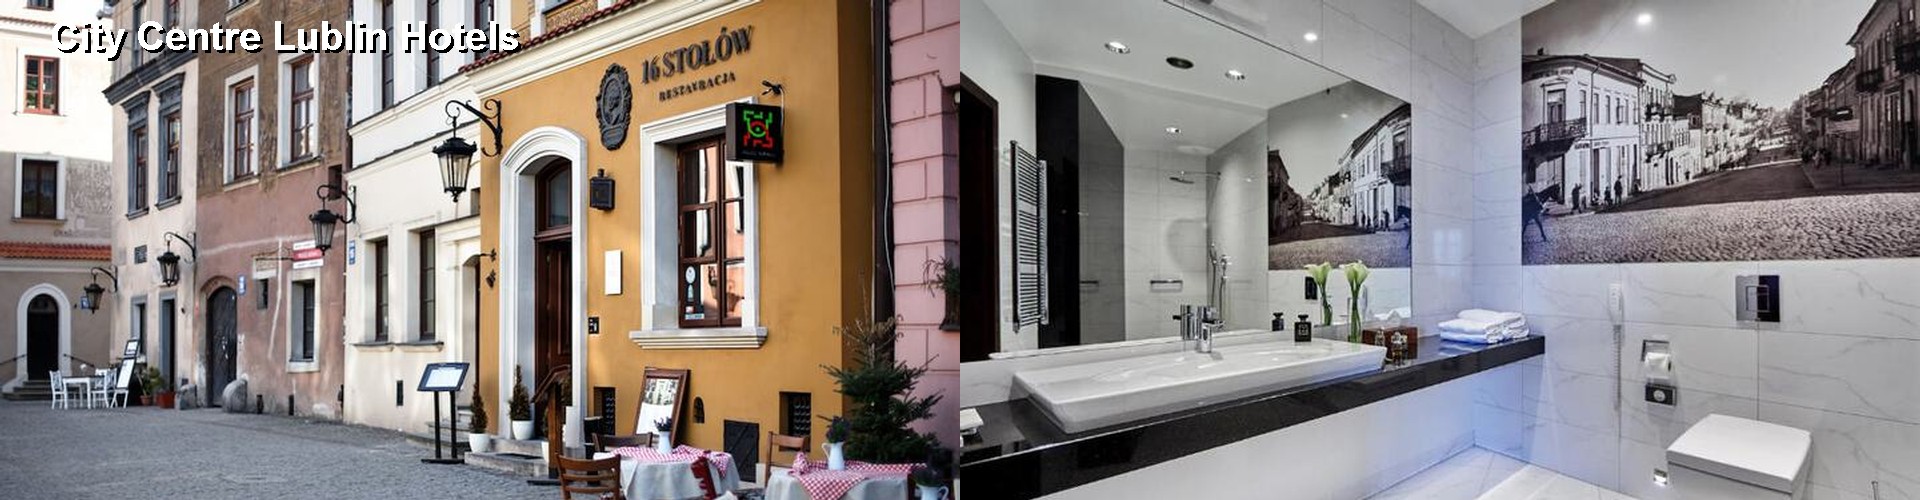 2 Best Hotels near City Centre Lublin